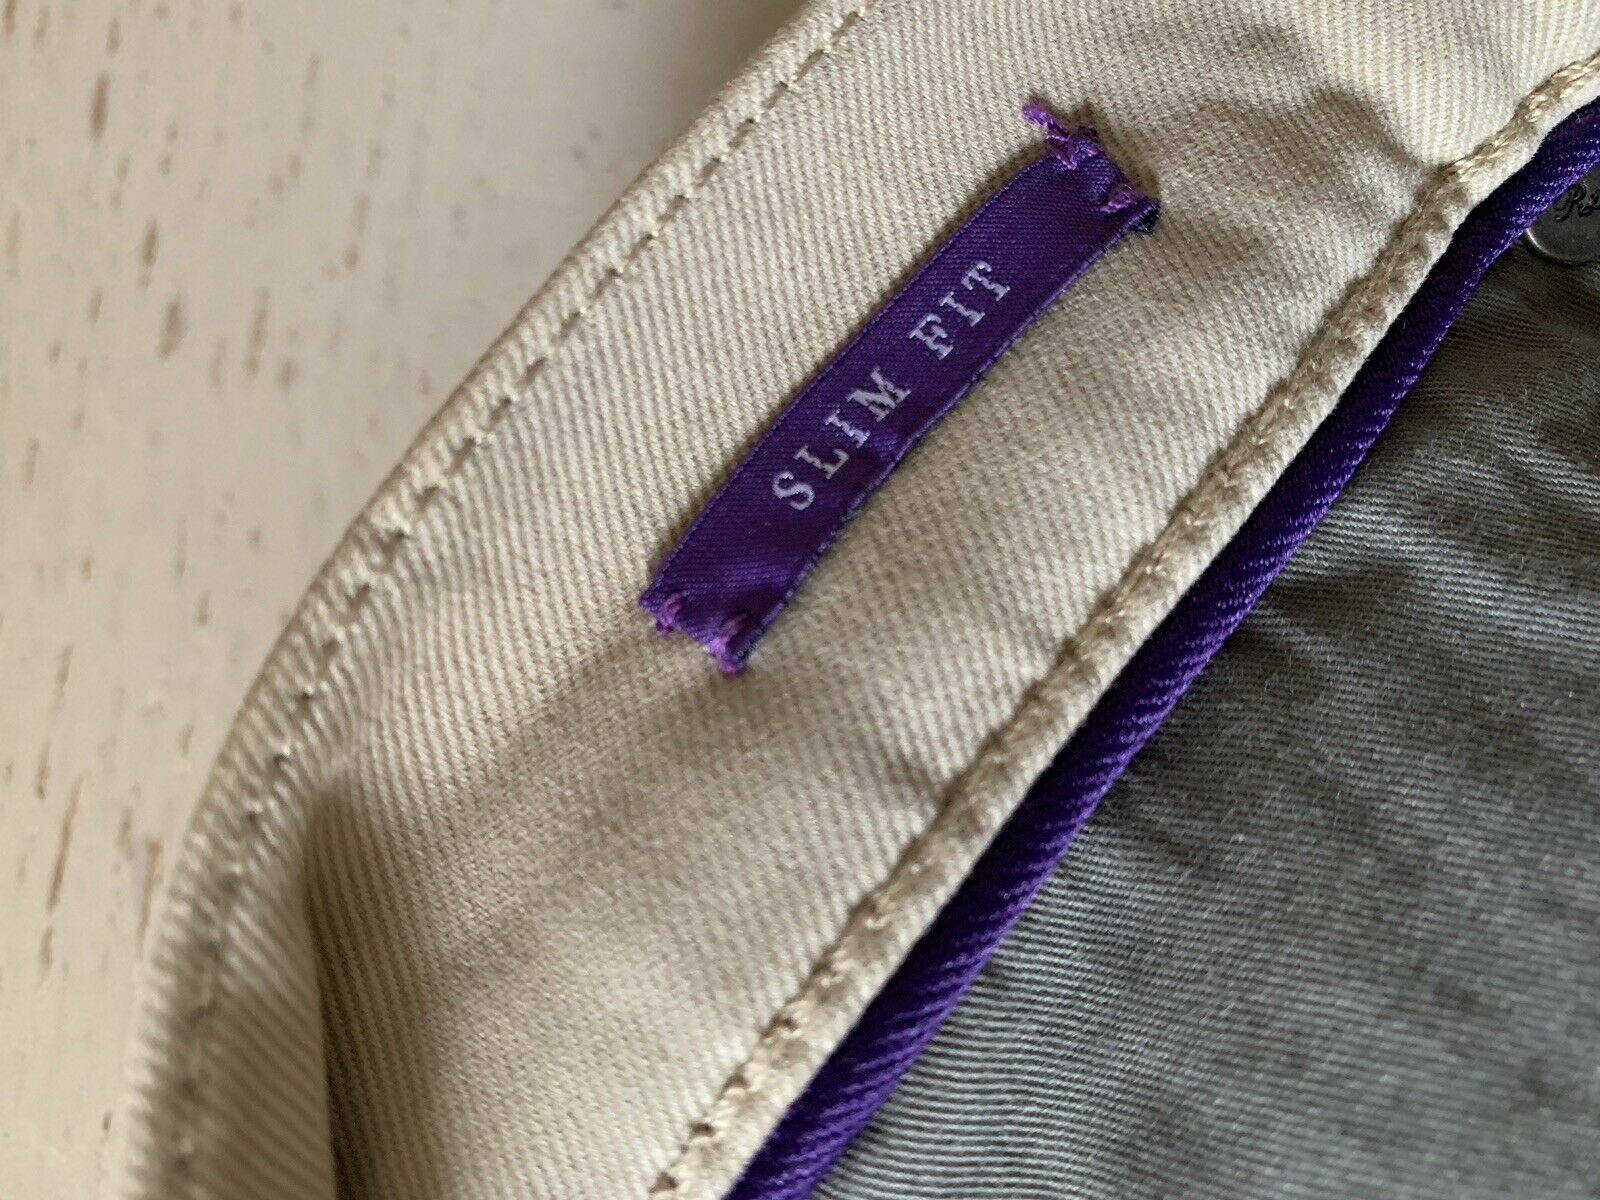 NWT $395 Ralph Lauren Purple Label Мужские джинсы Брюки Slim Fit Бежевые 34/32L США